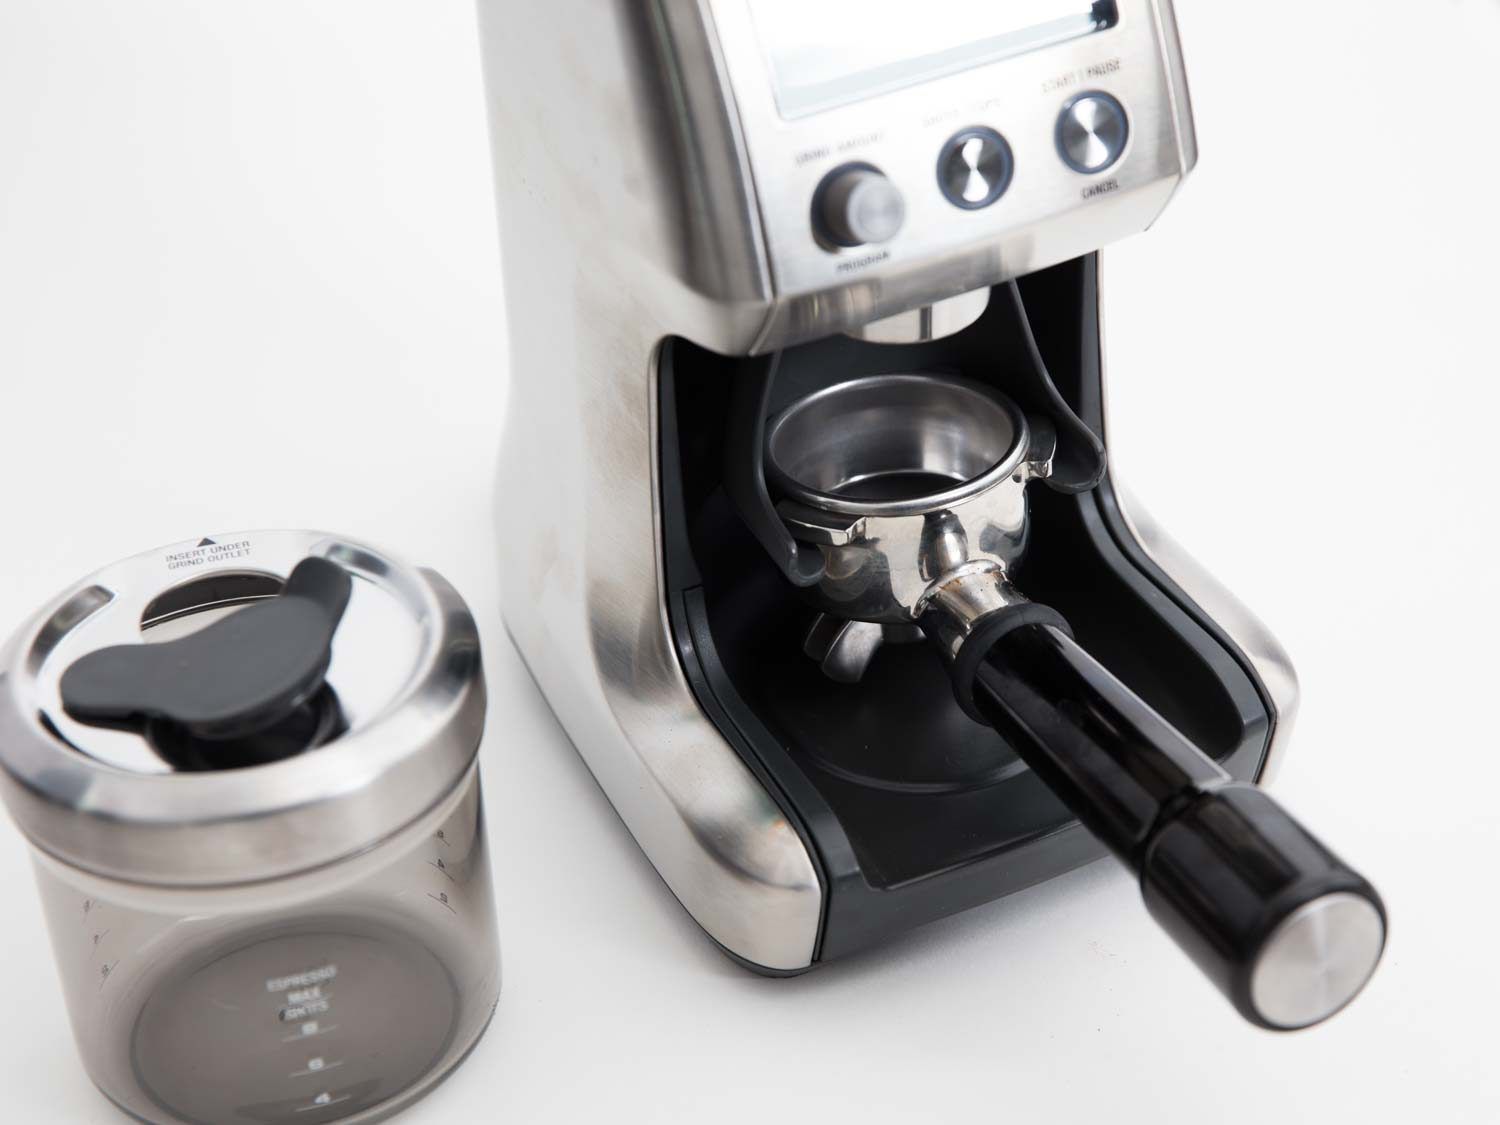 Brevillecoffee grinder with portafilter attachment